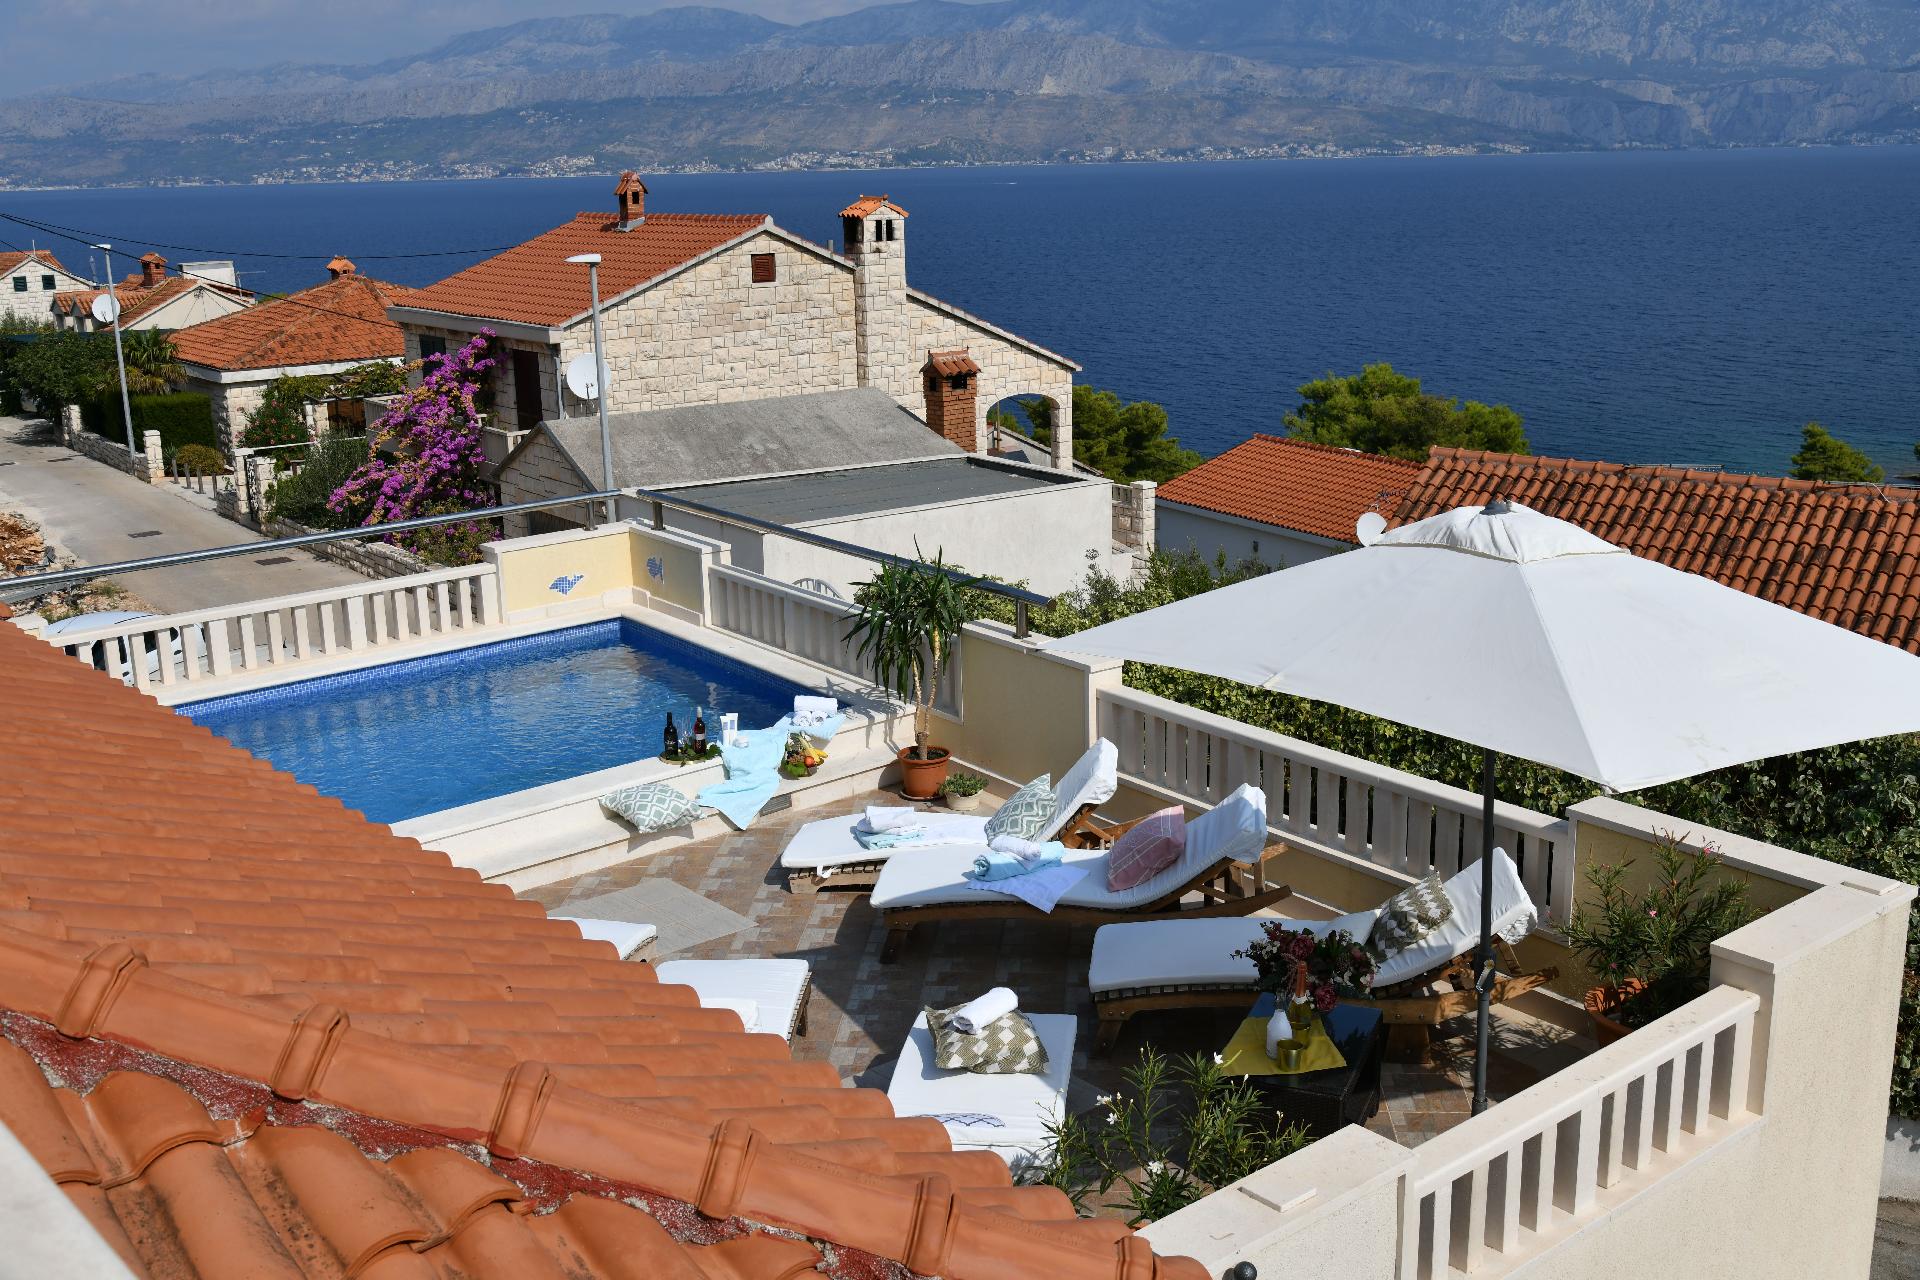 Ferienvilla in ruhiger Lage mit Pool Ferienhaus in Kroatien